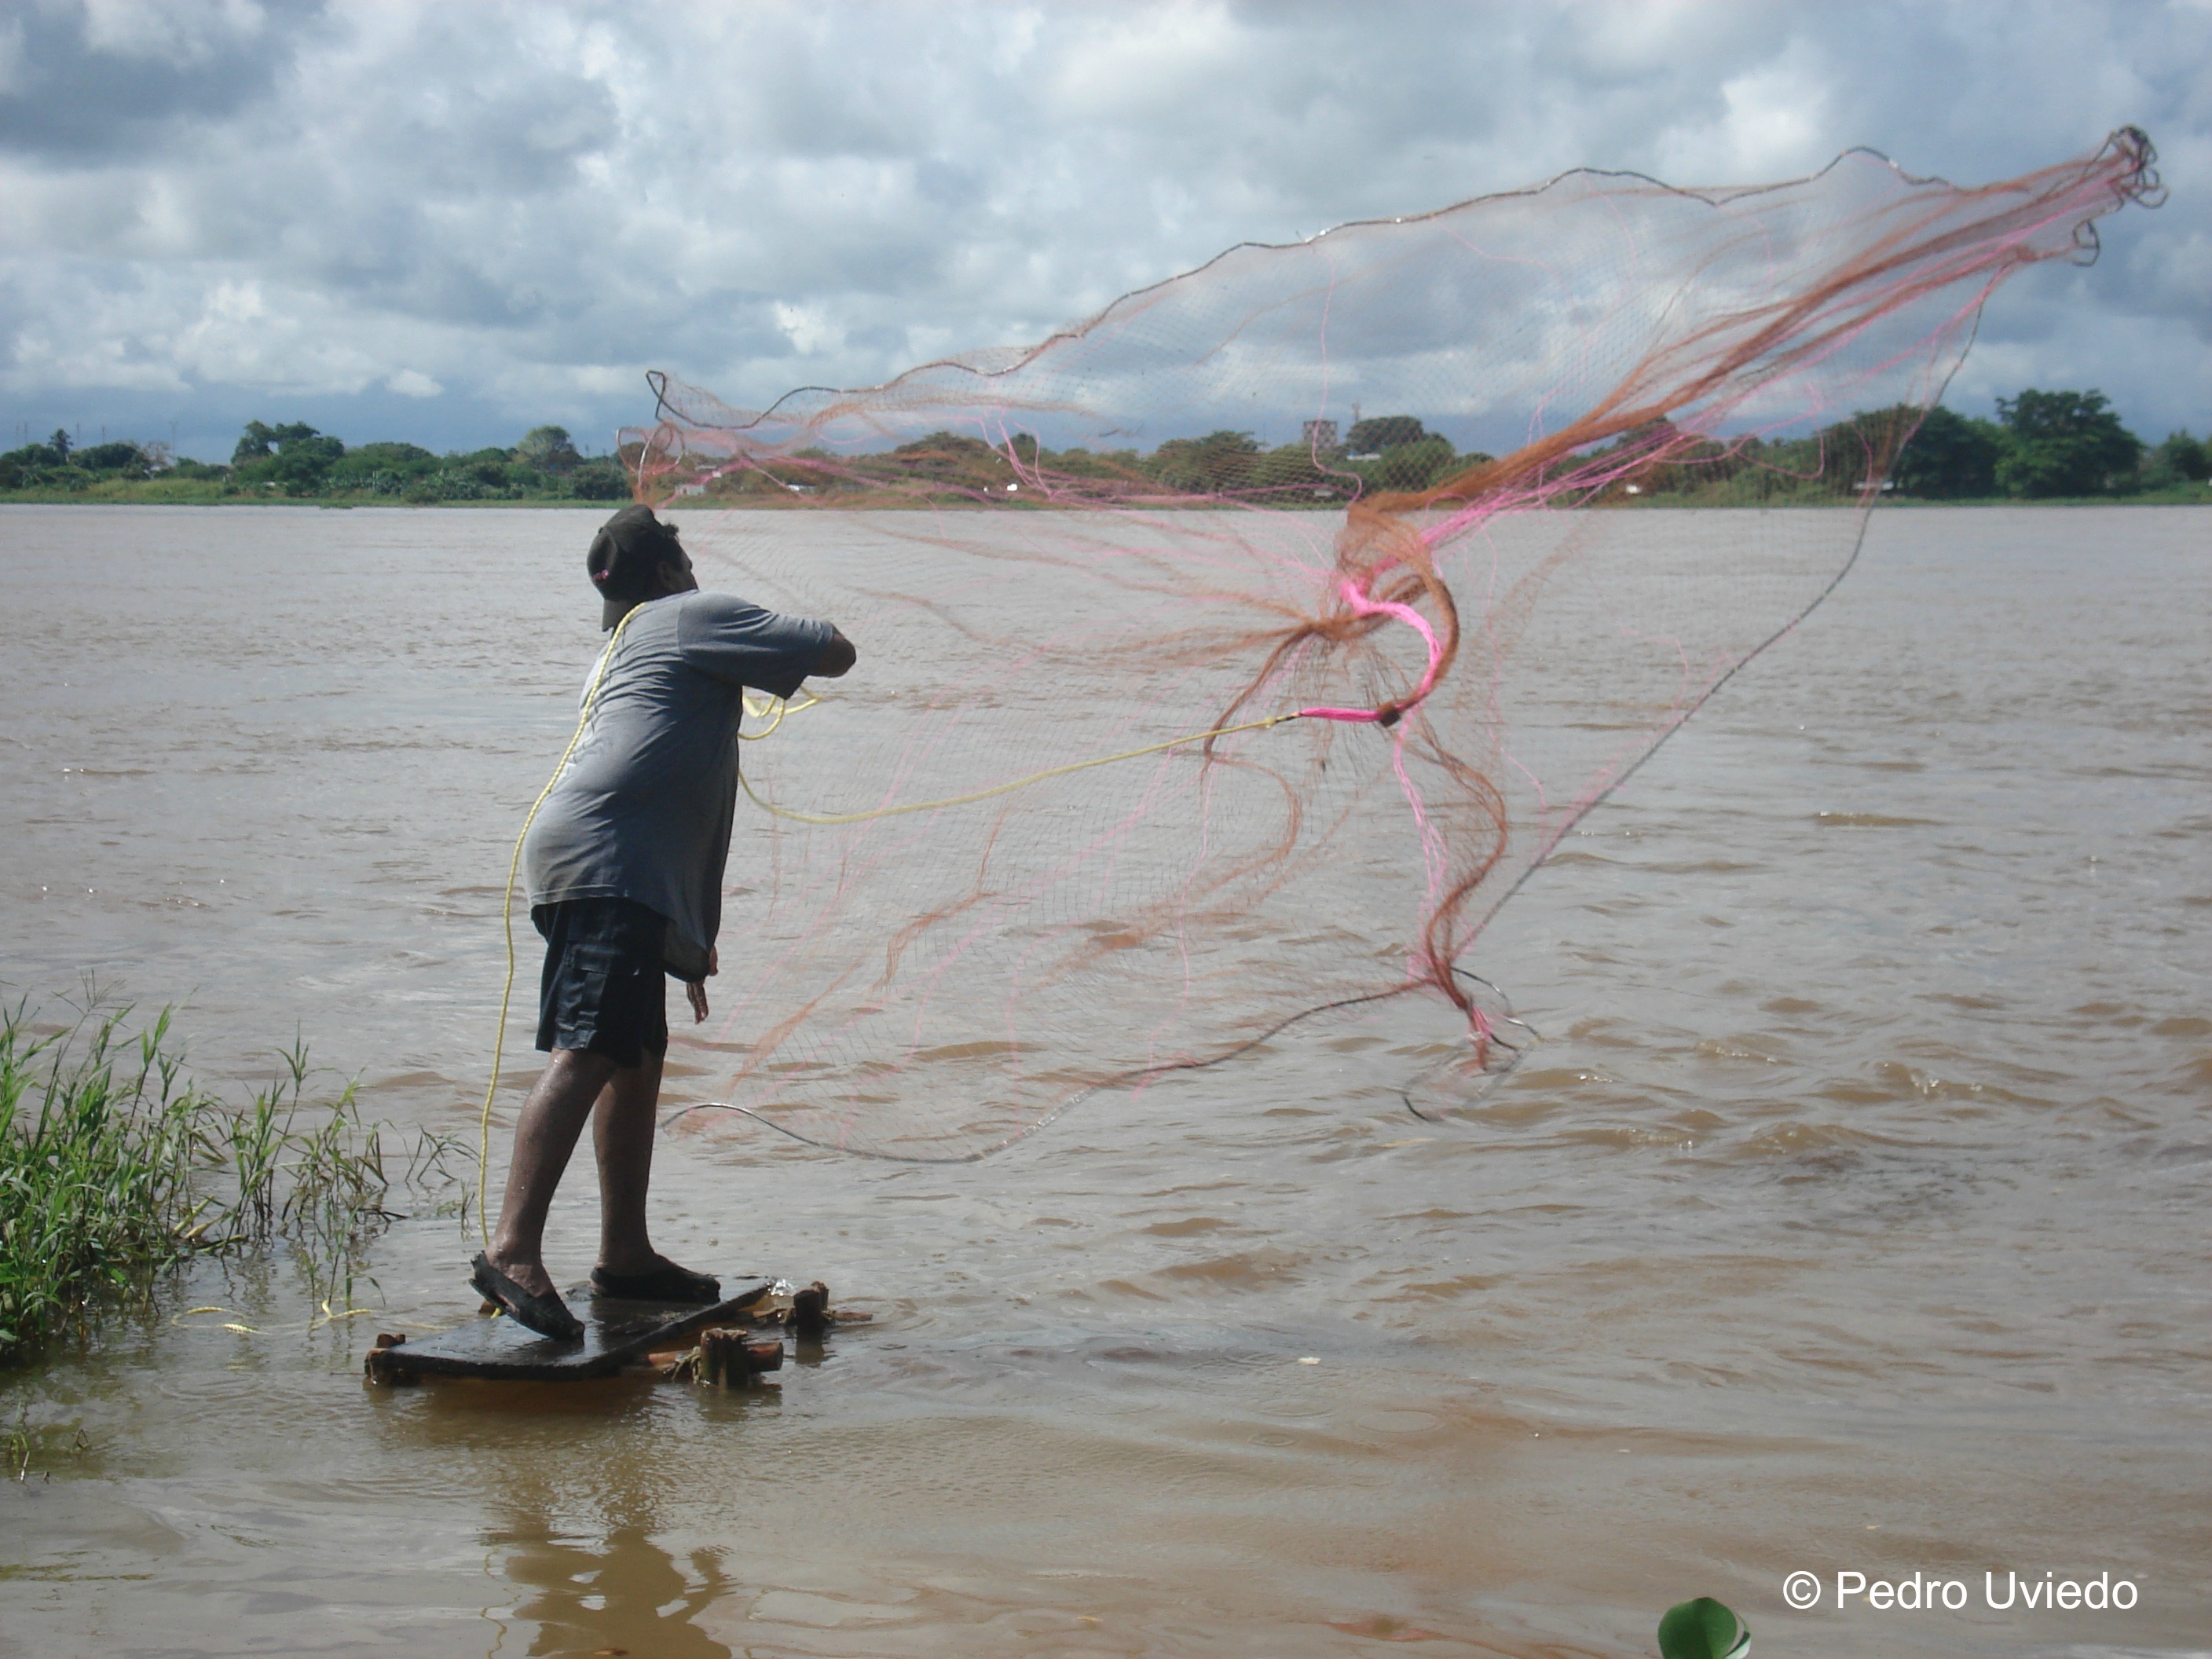 Artisanal fisherman on the Apure River, Venezuela